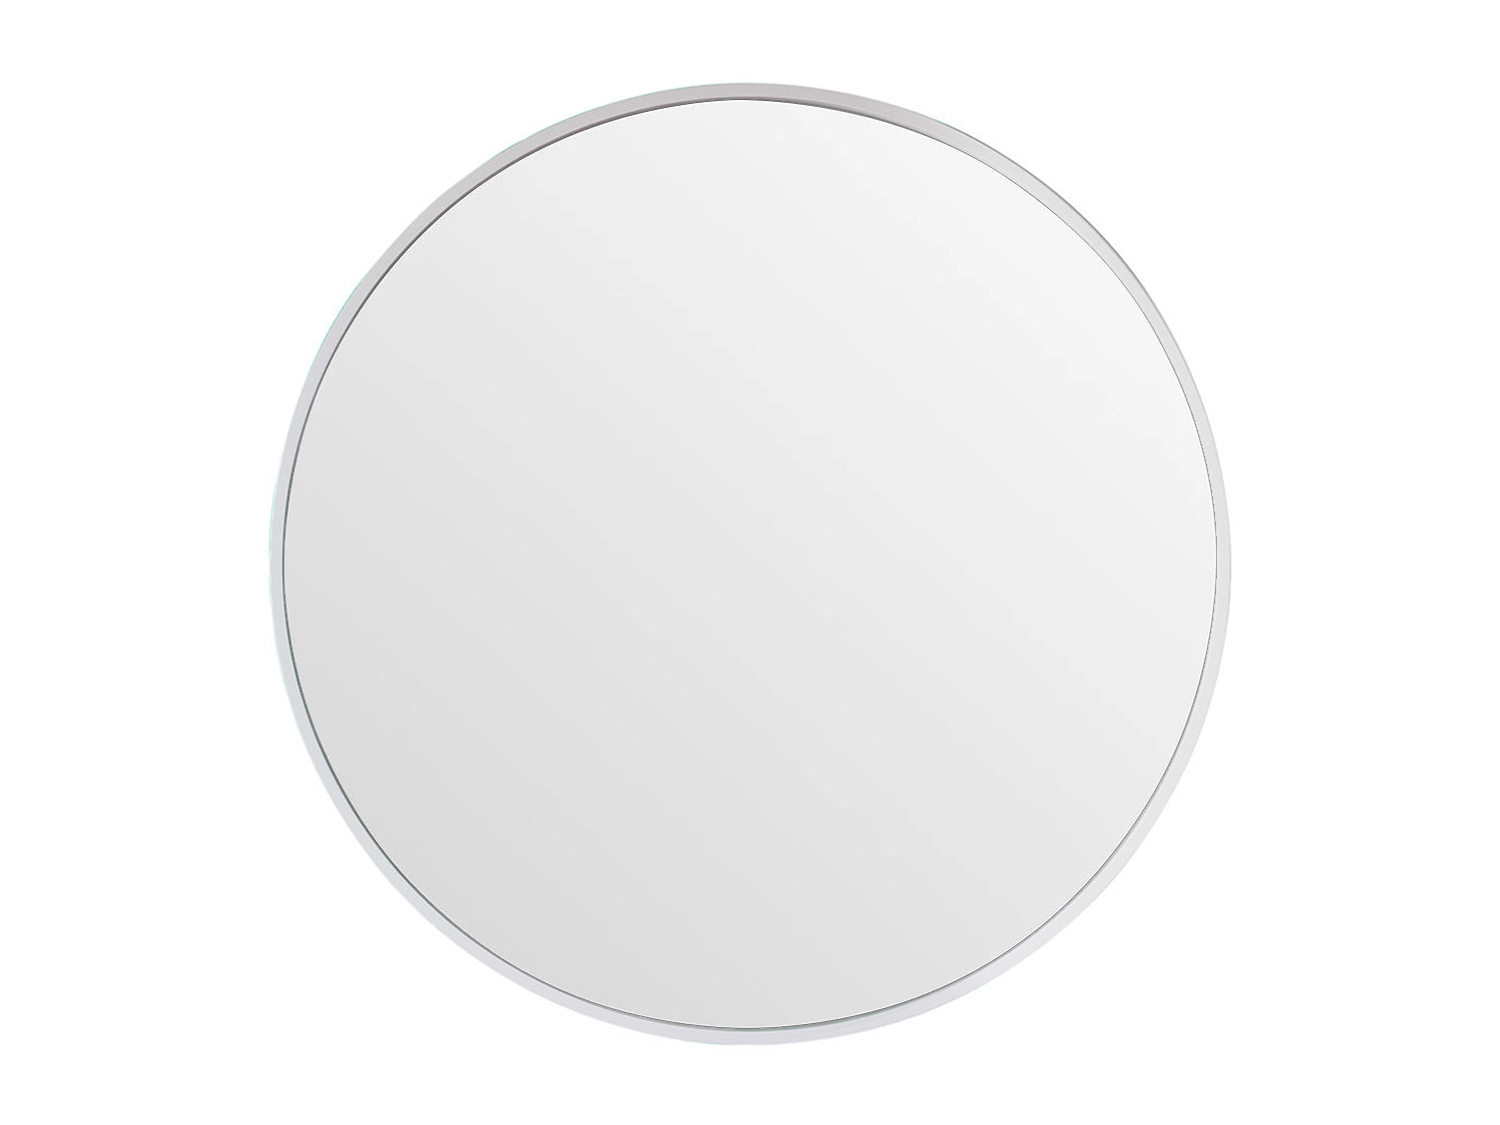 Silver Aluminum Framed Round Mirror - 600mm